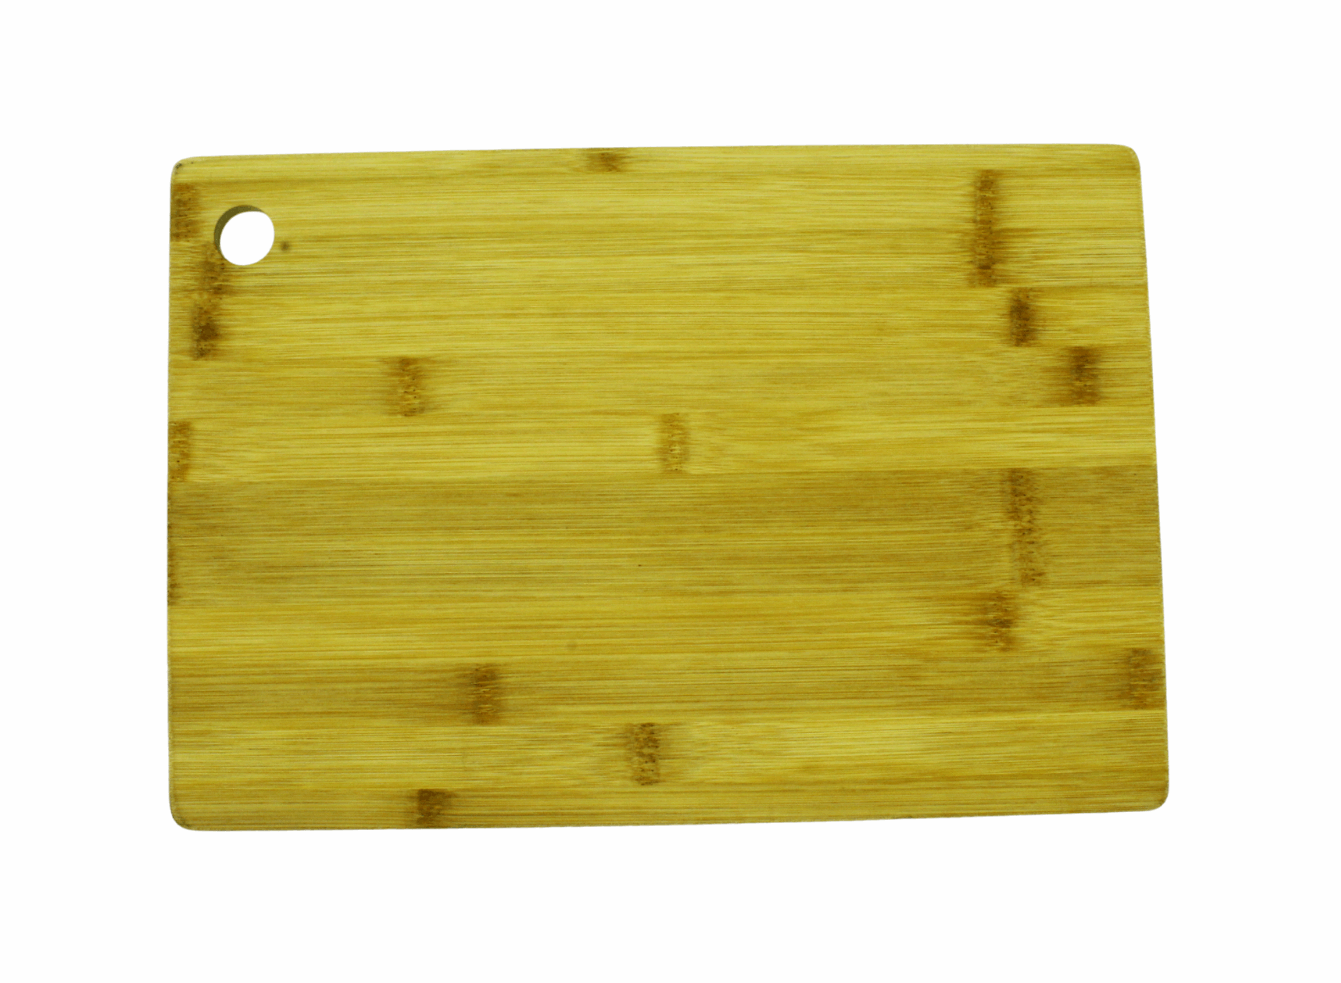 Bamboo Chopping | Cutting Board 13 x 9 inches | 0.52 KG TRILONIUM | Cast Iron Cookware